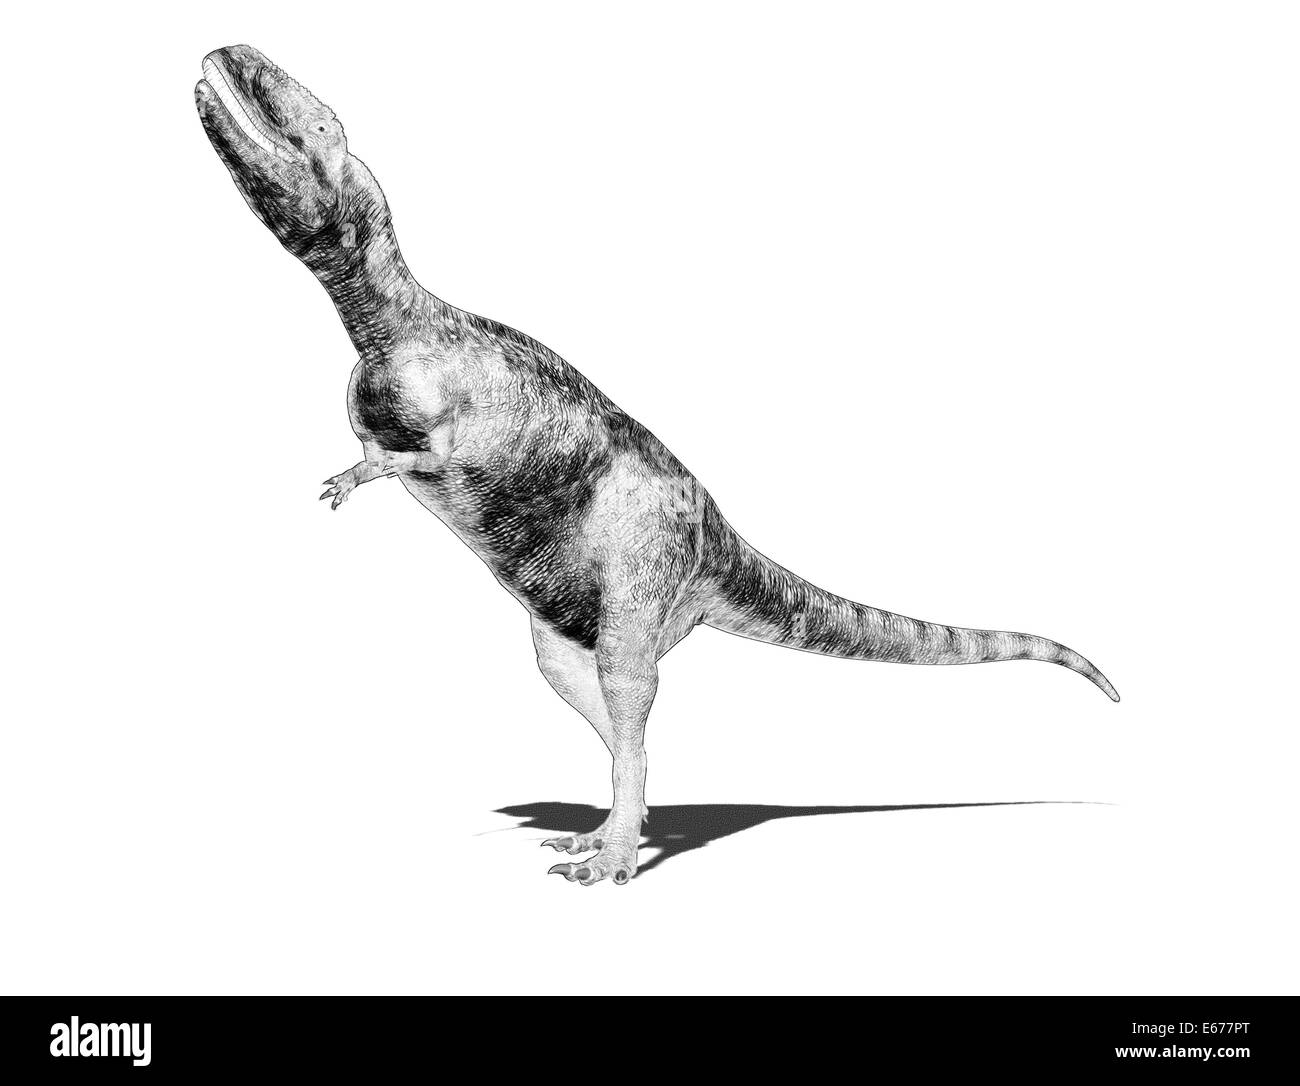 Dinosaurier Abelisaurus / Abelisaurus dinosauro Foto Stock